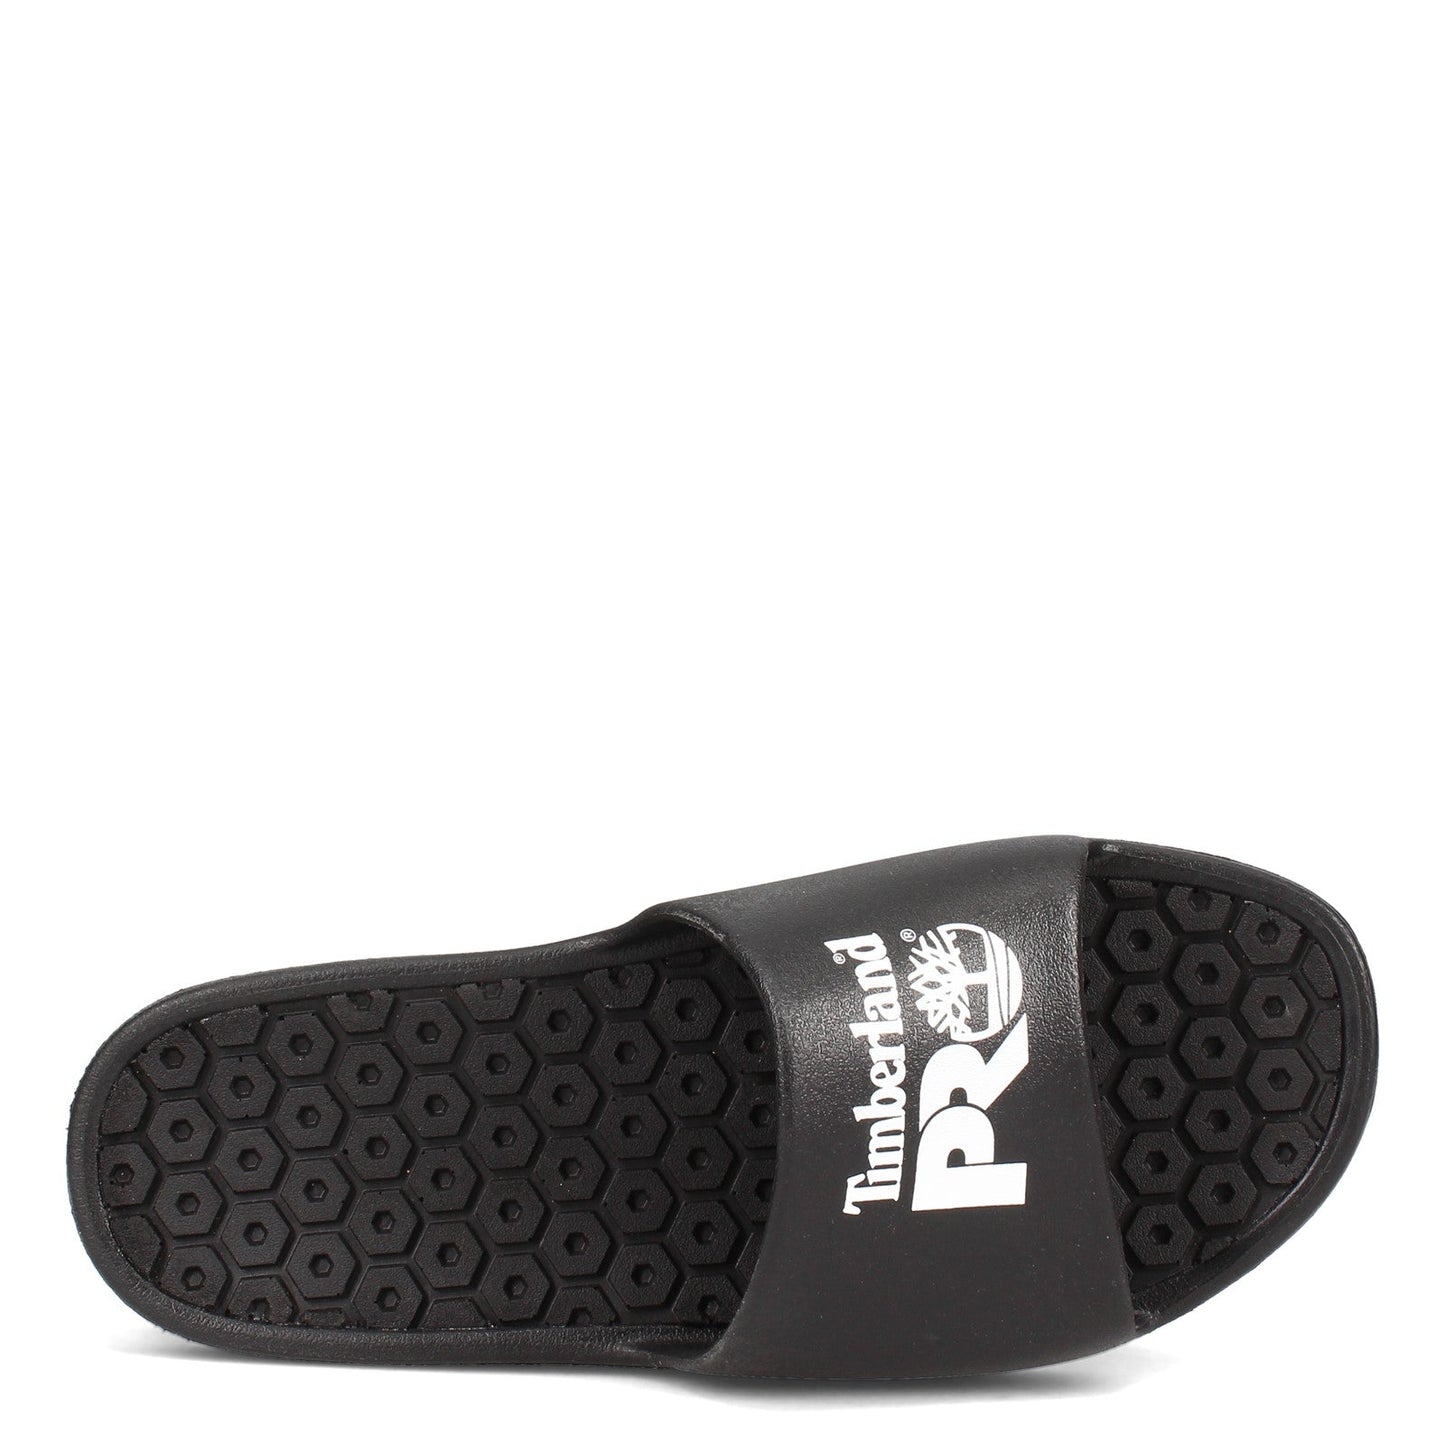 Timberland PRO Mens Size 7M Black White Slides Shower Shoes TB 0A2A7C 001 AFT